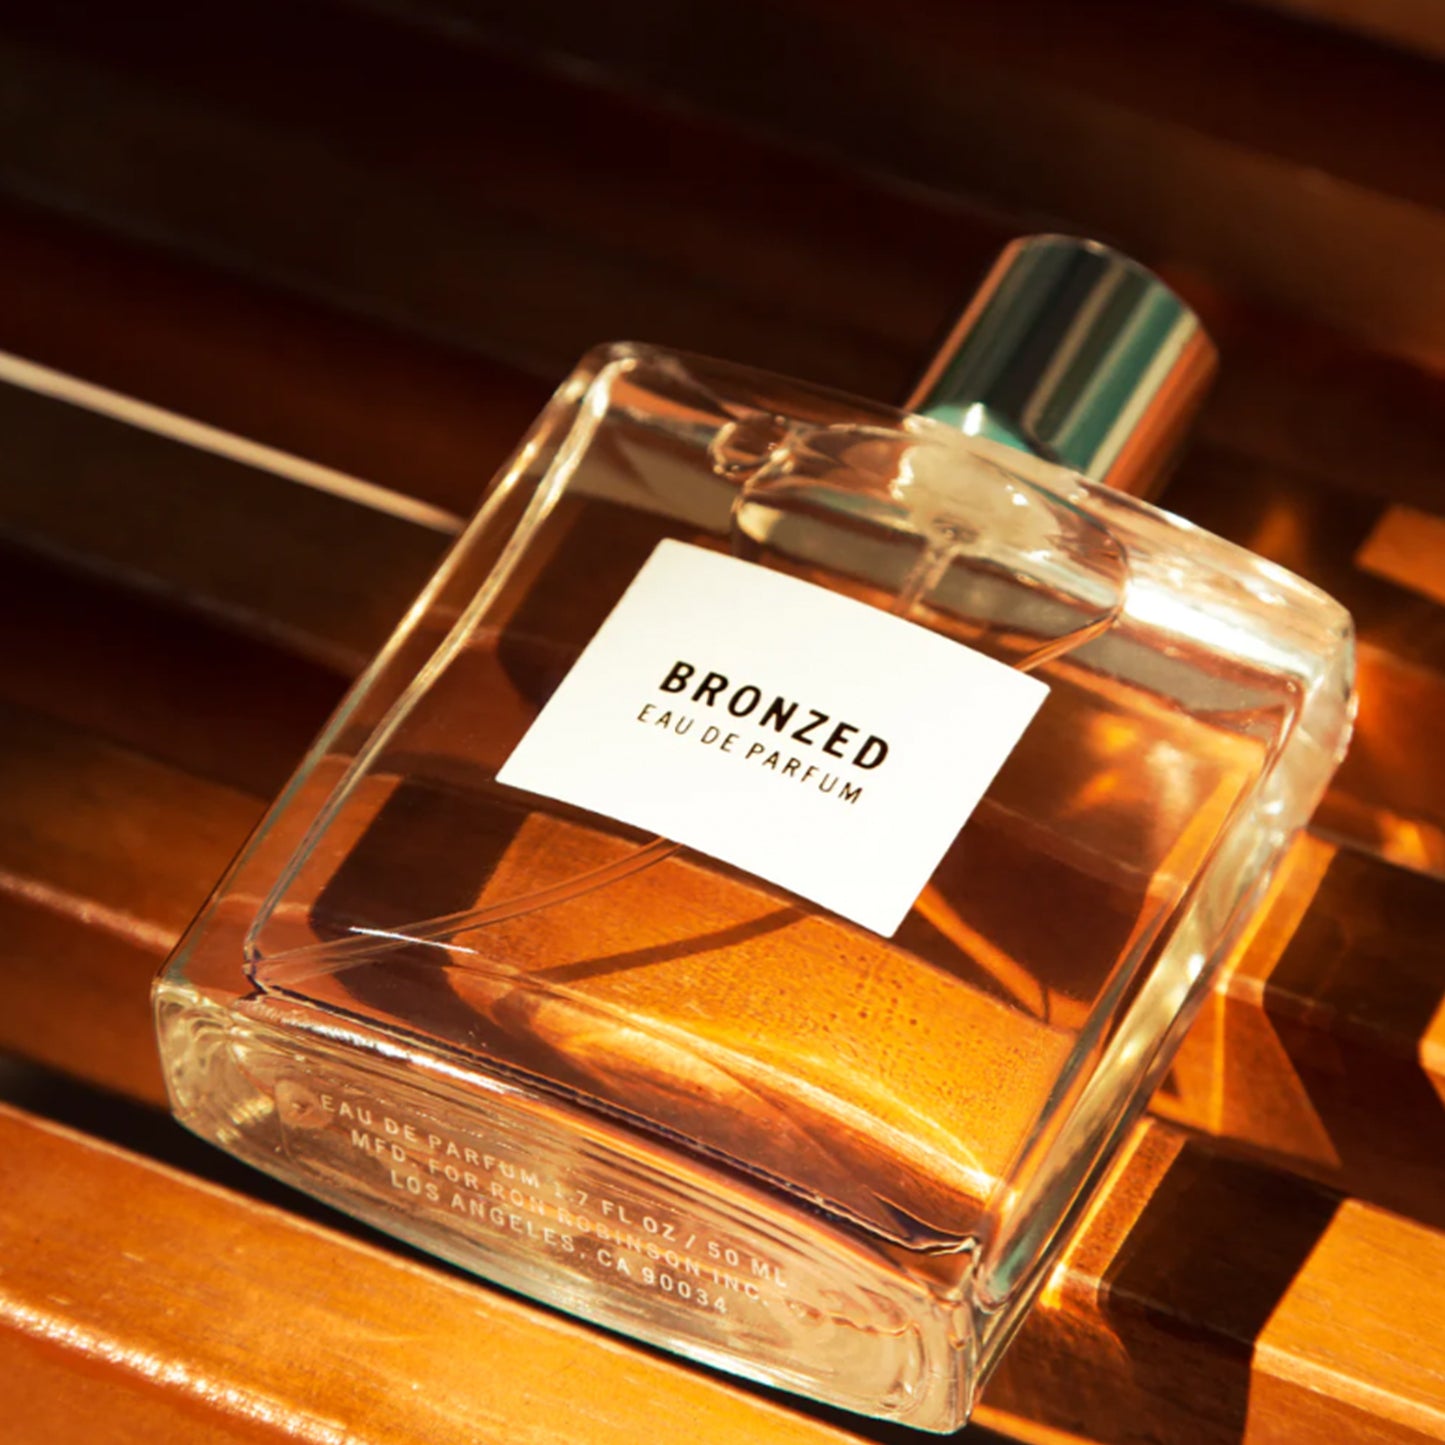 APOTHIA BRONZED eau de parfum 50ml (パフューム)  Bronzed